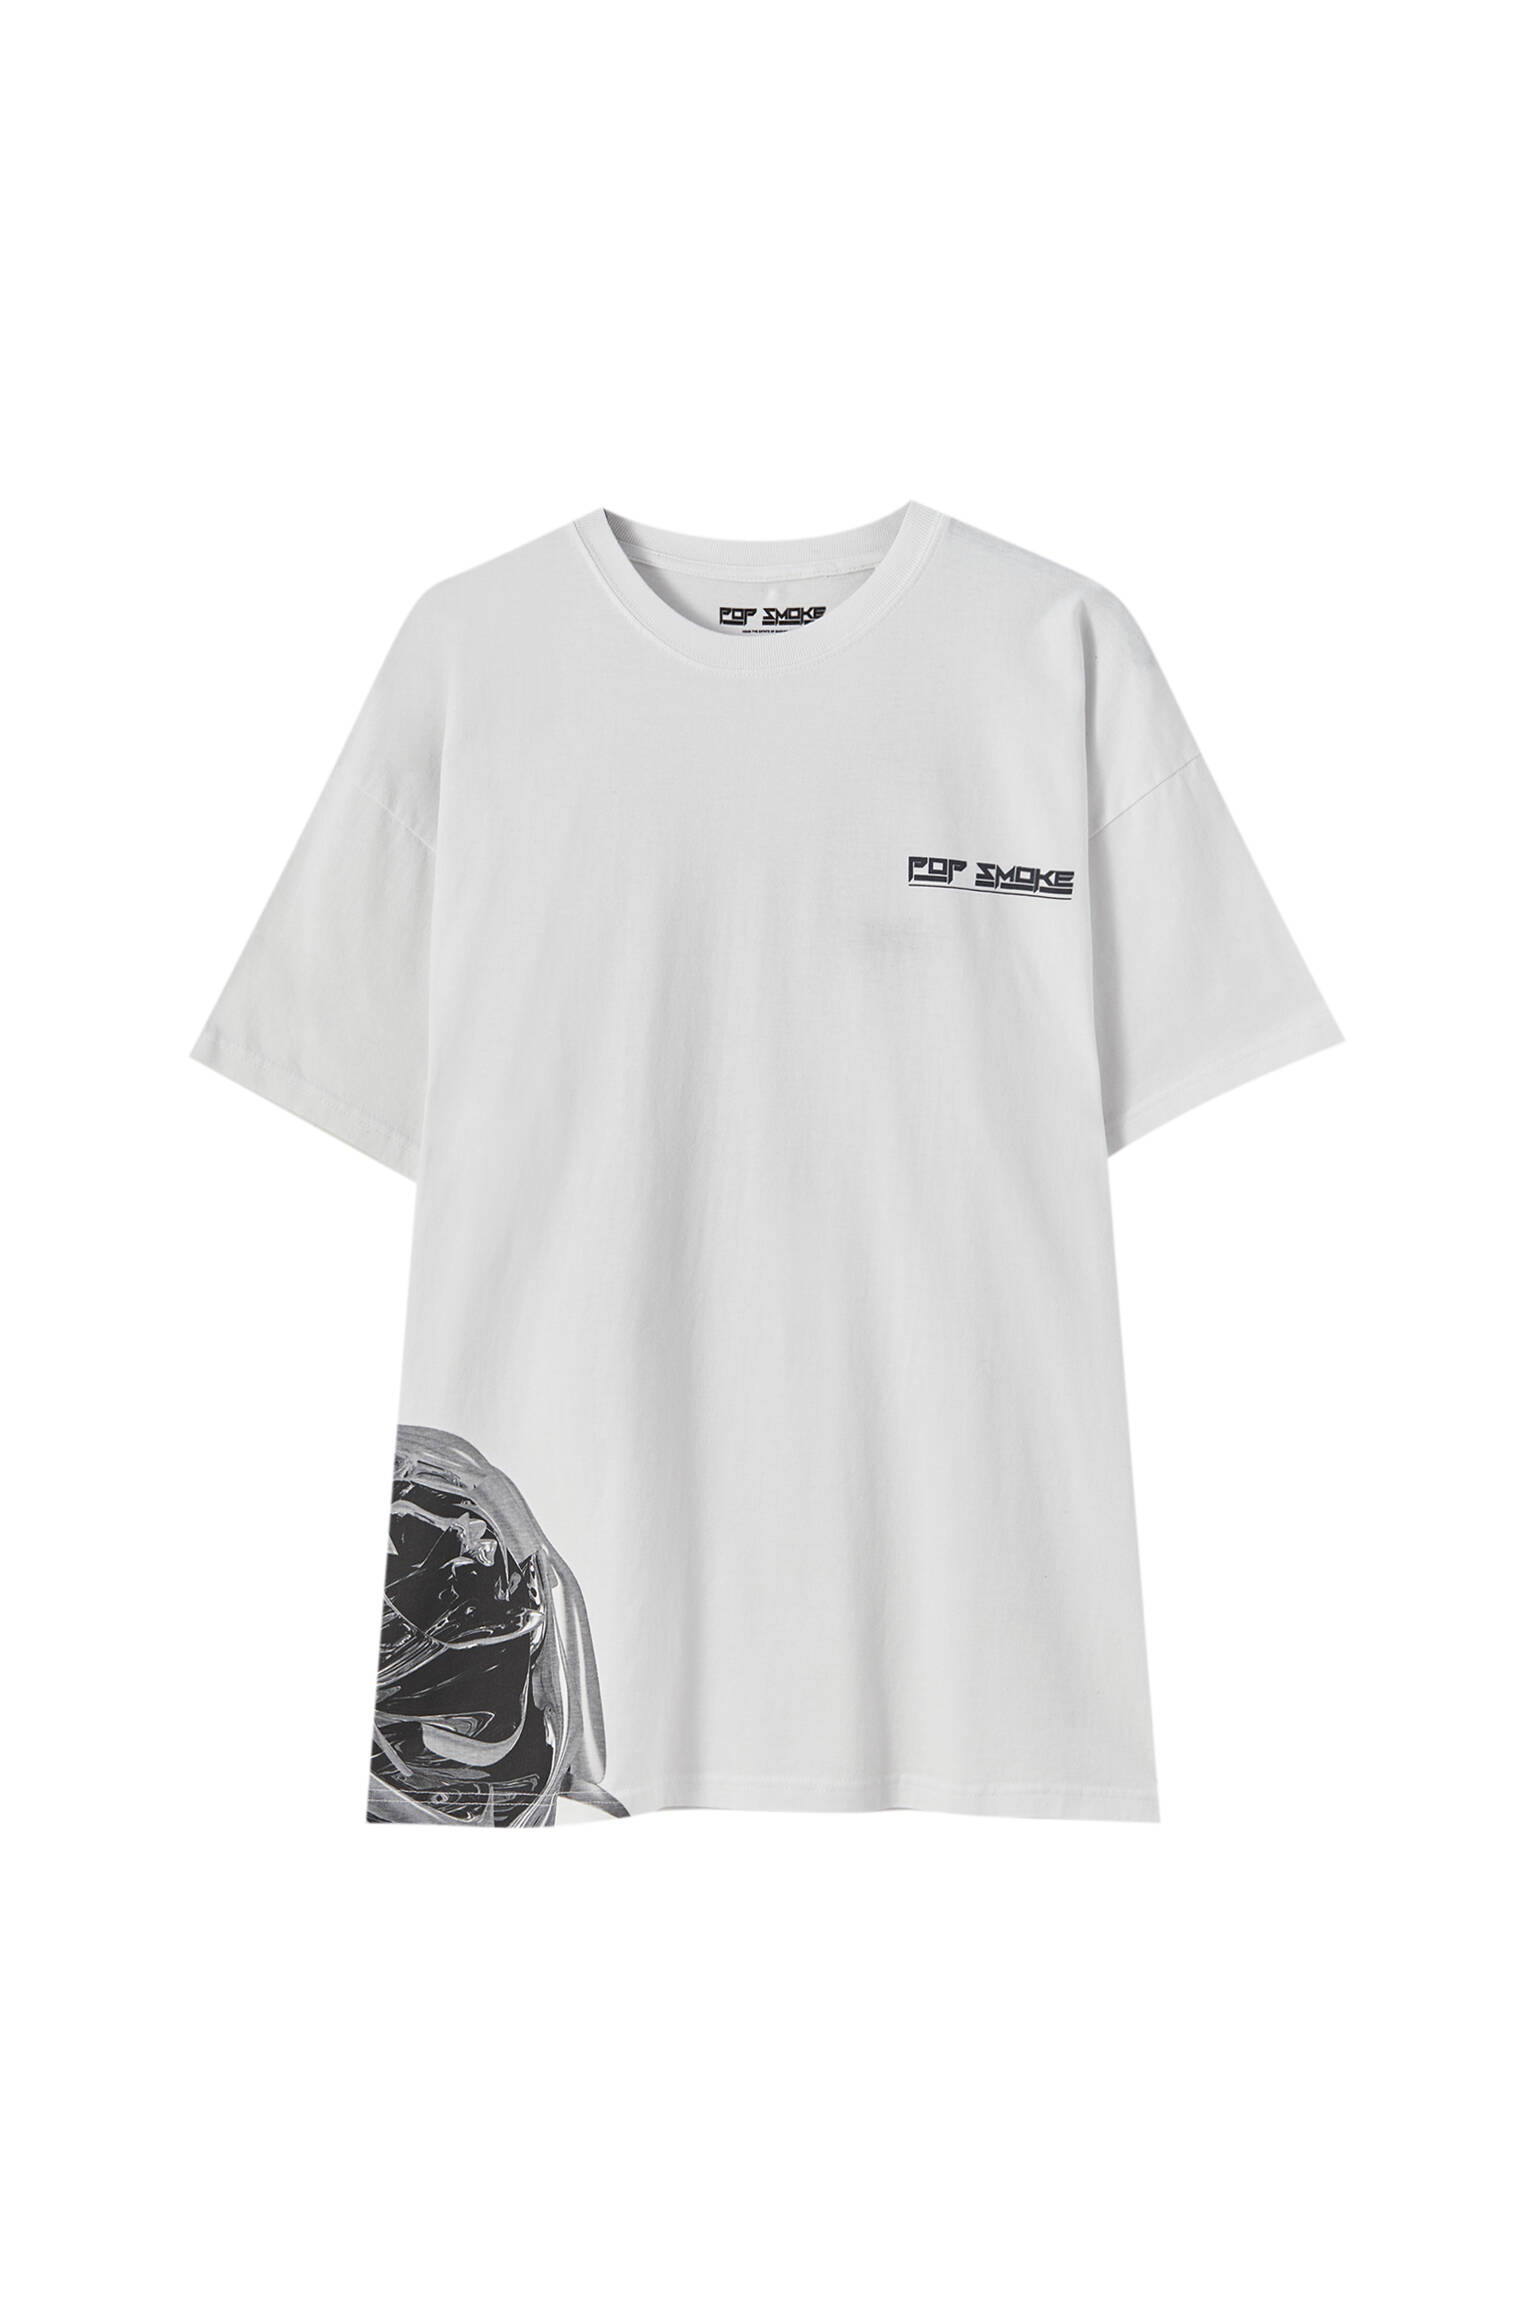 БЕЛЫЙ Белая футболка Pop Smoke Pull & Bear